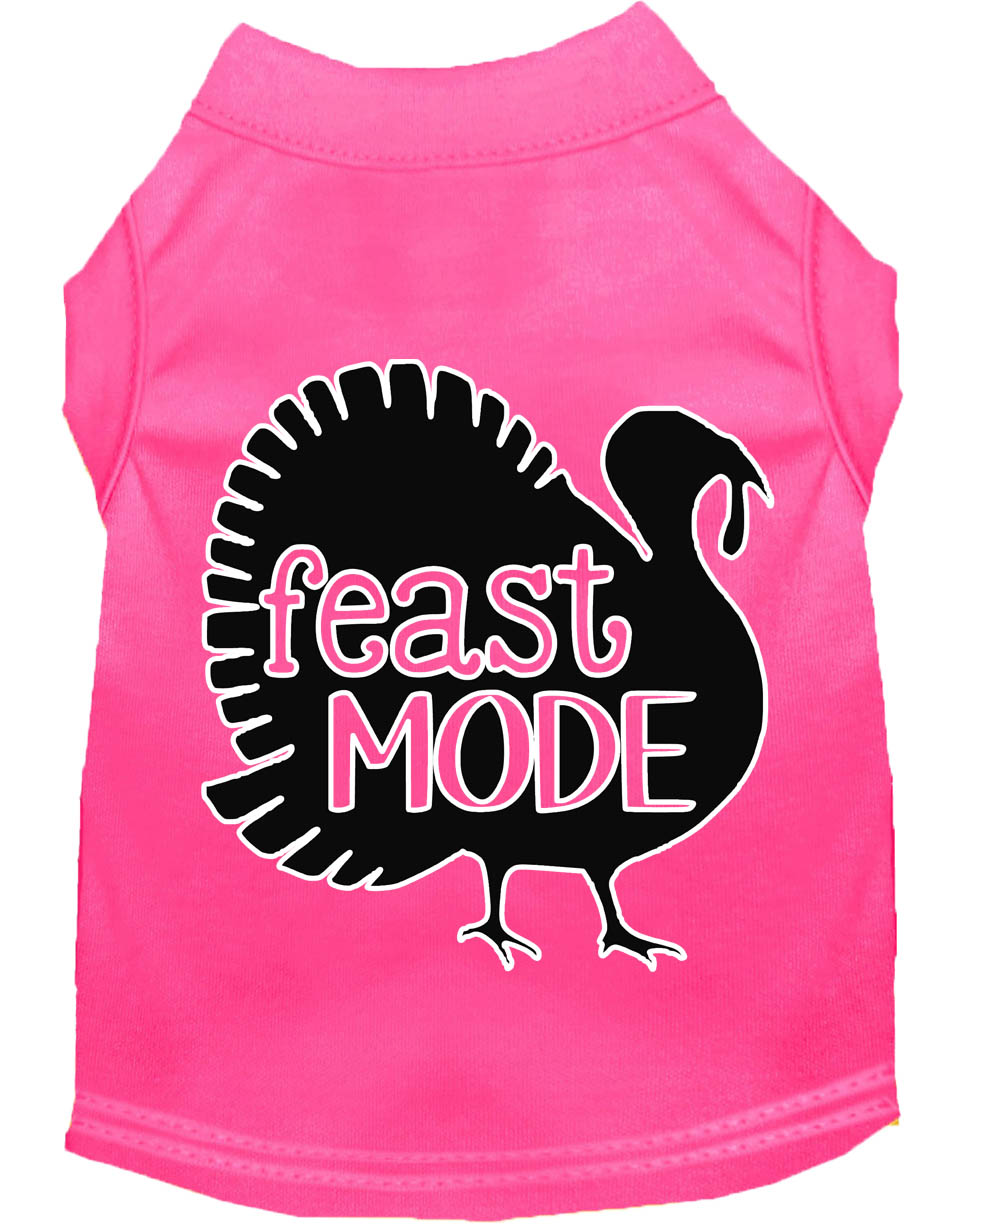 Feast Mode Screen Print Dog Shirt Bright Pink Sm